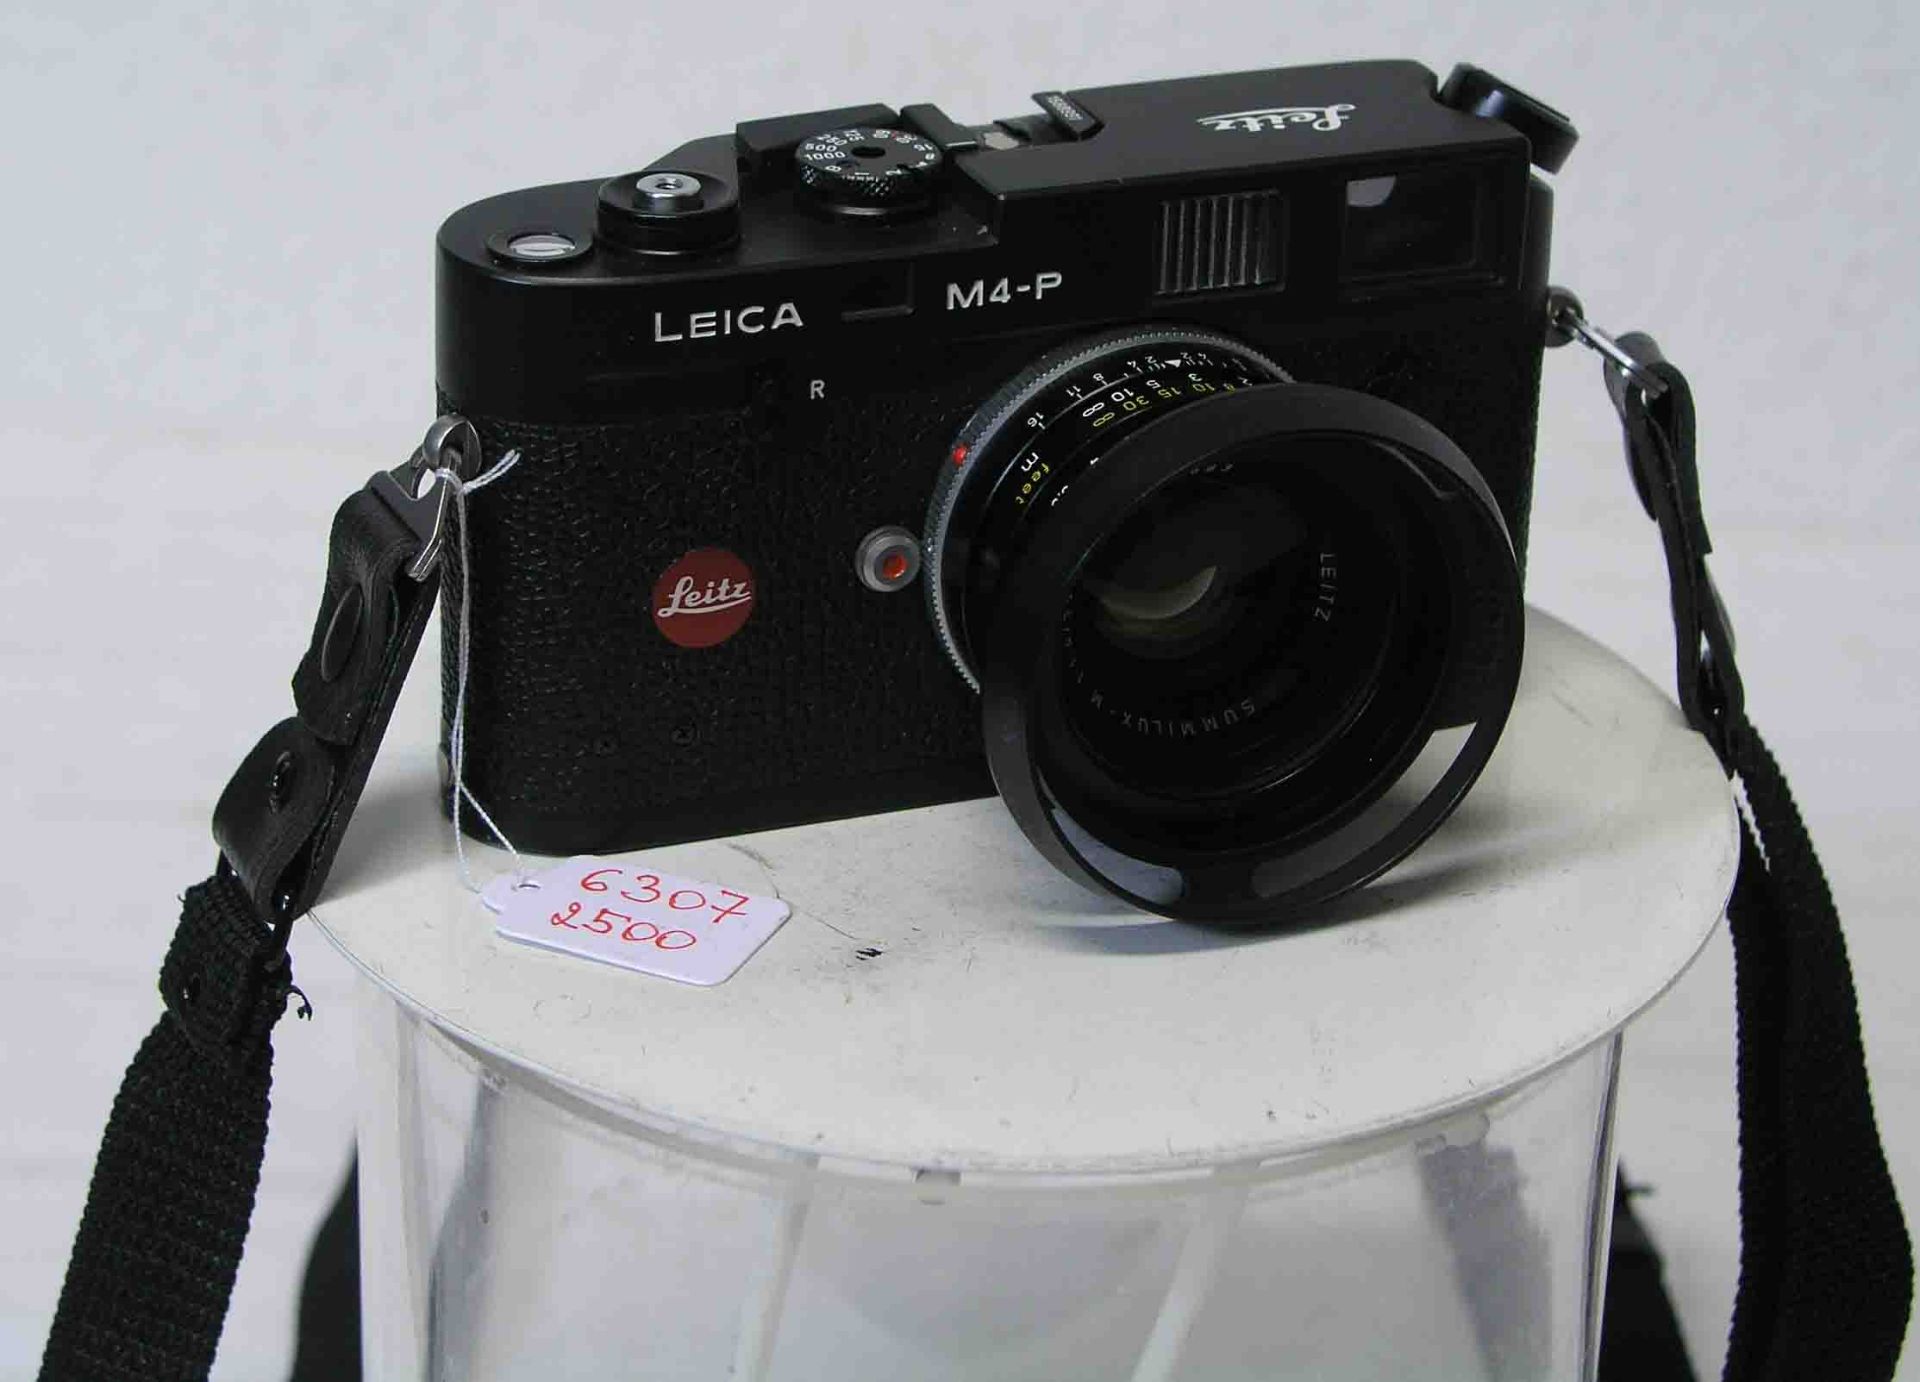 Fotoapparat Leica M 4 - P, 1588991 mit Objektiv 1:1,4 / 35mm, 3253883. Funktion nichtgeprüft.